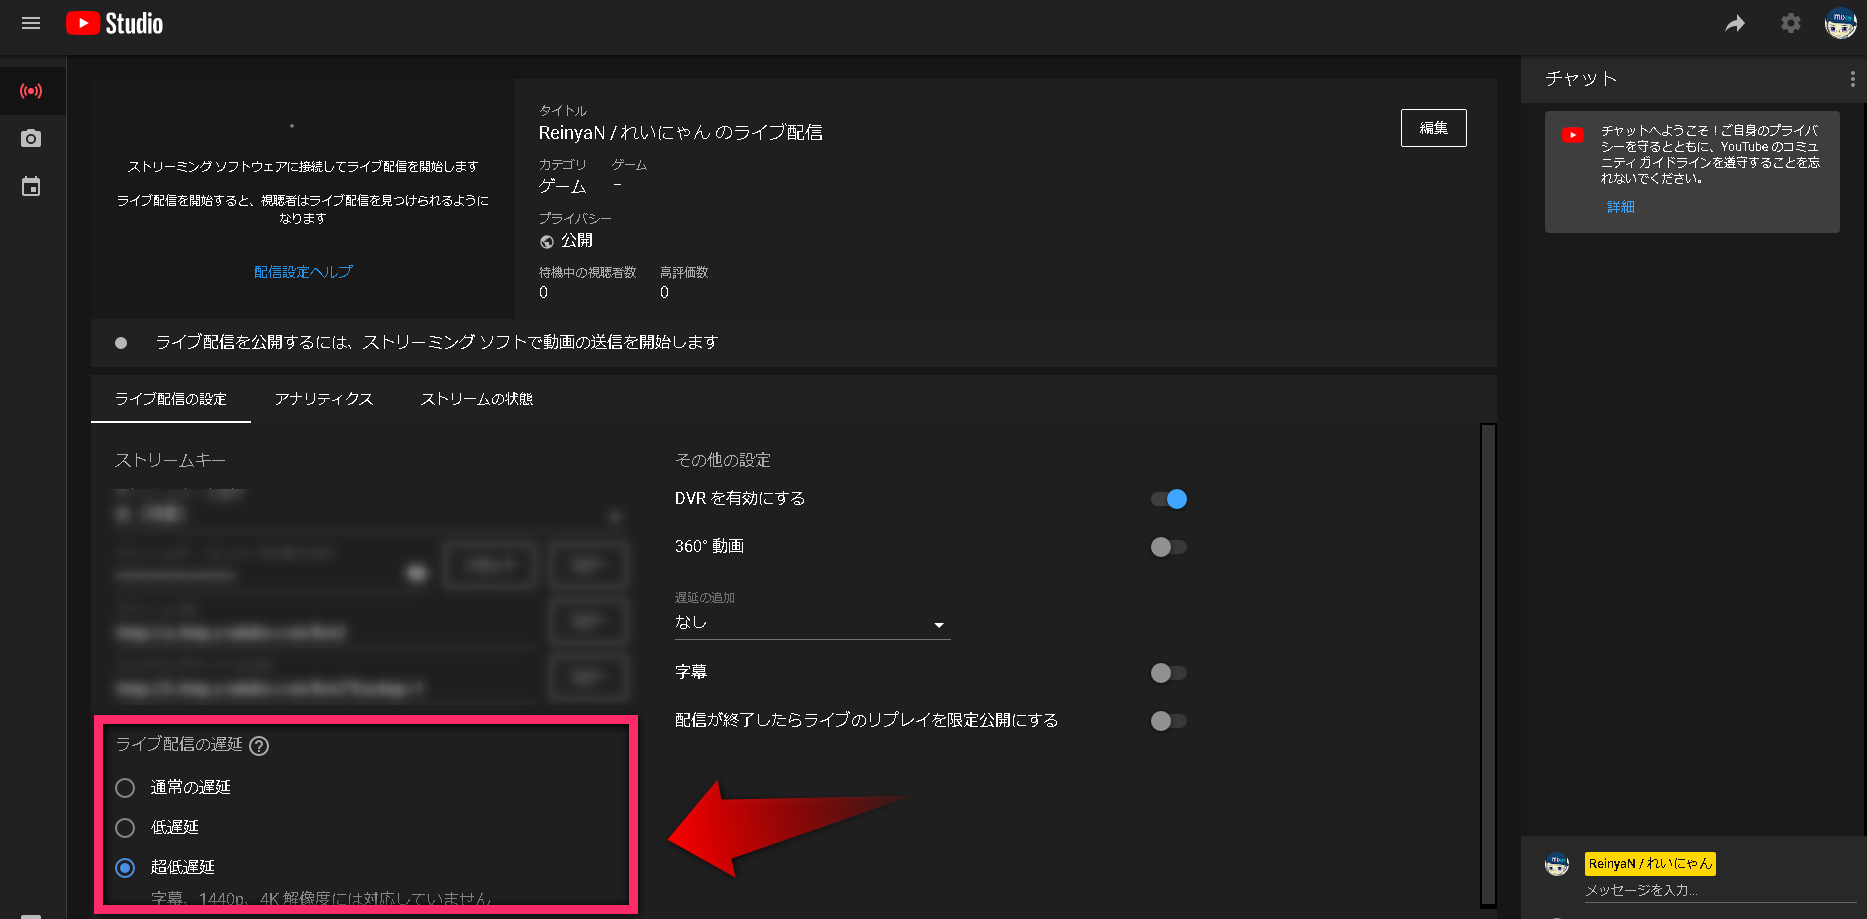 Youtubelive Ps4編 ゲーム配信するときに超低遅延の設定方法 Akamaruserver